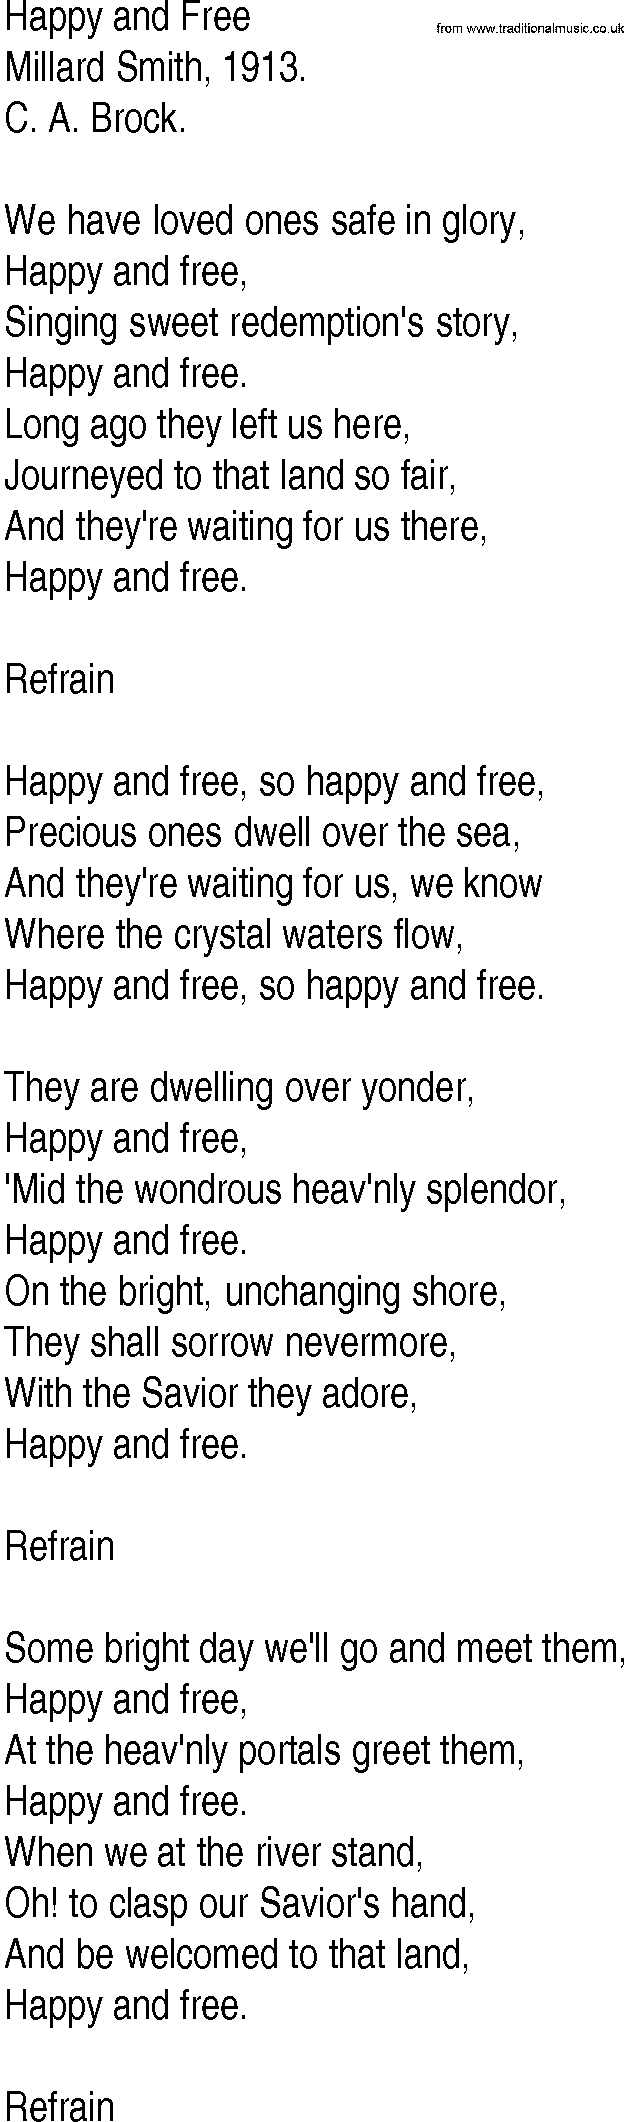 Hymn and Gospel Song: Happy and Free by Millard Smith lyrics